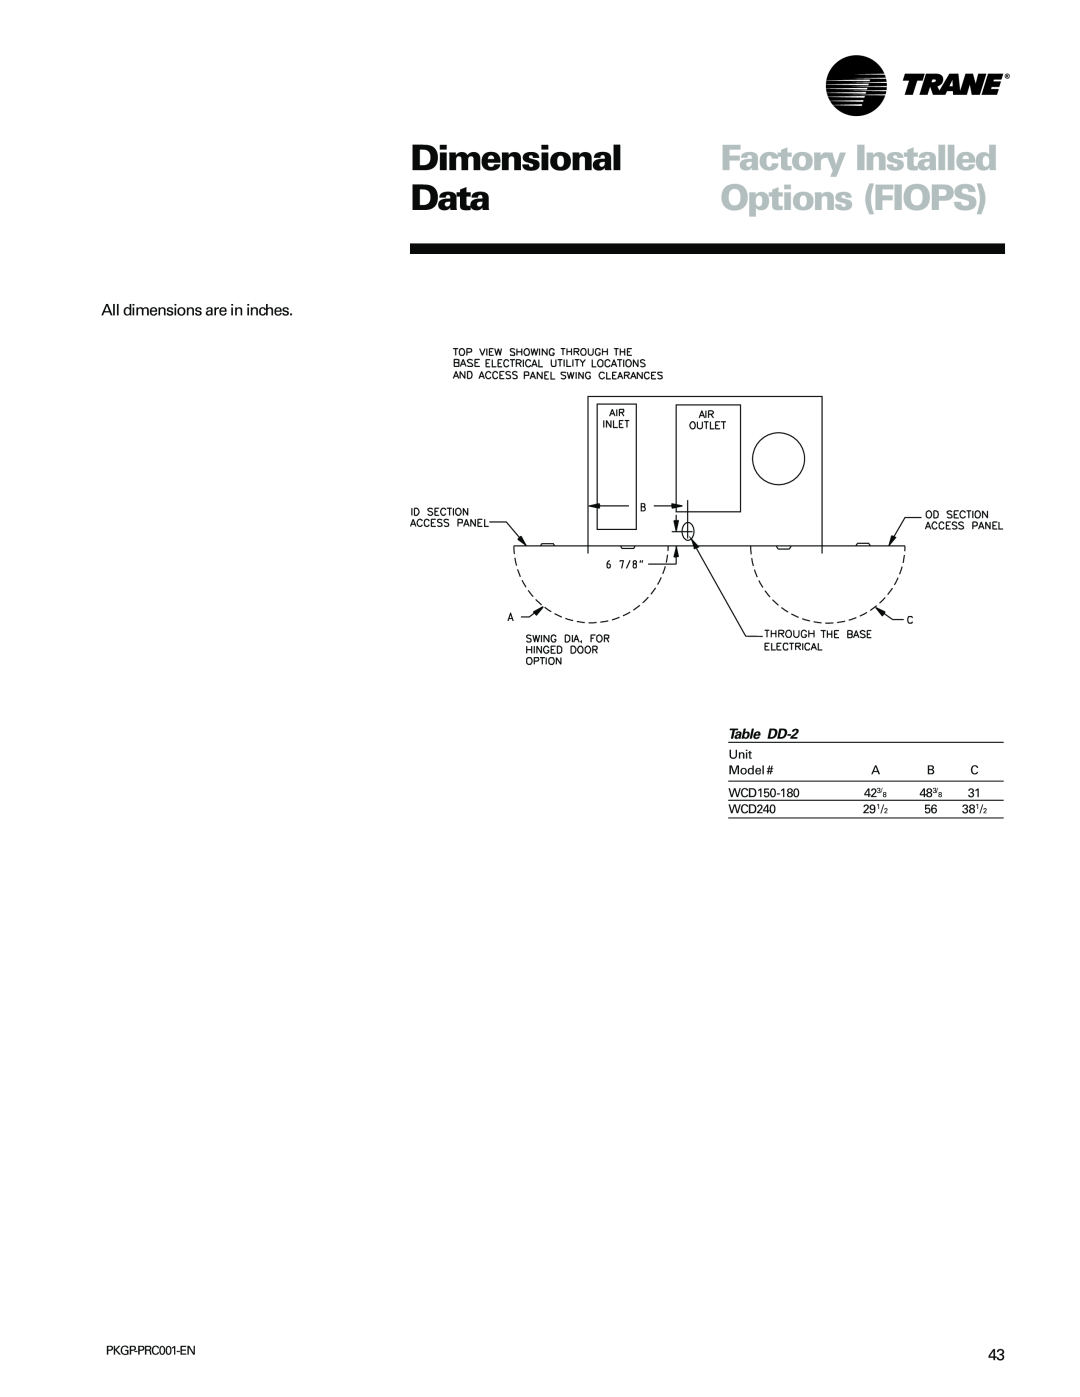 Trane PKGP-PRC001-EN manual Options FIOPS, Factory Installed, Dimensional, Data 